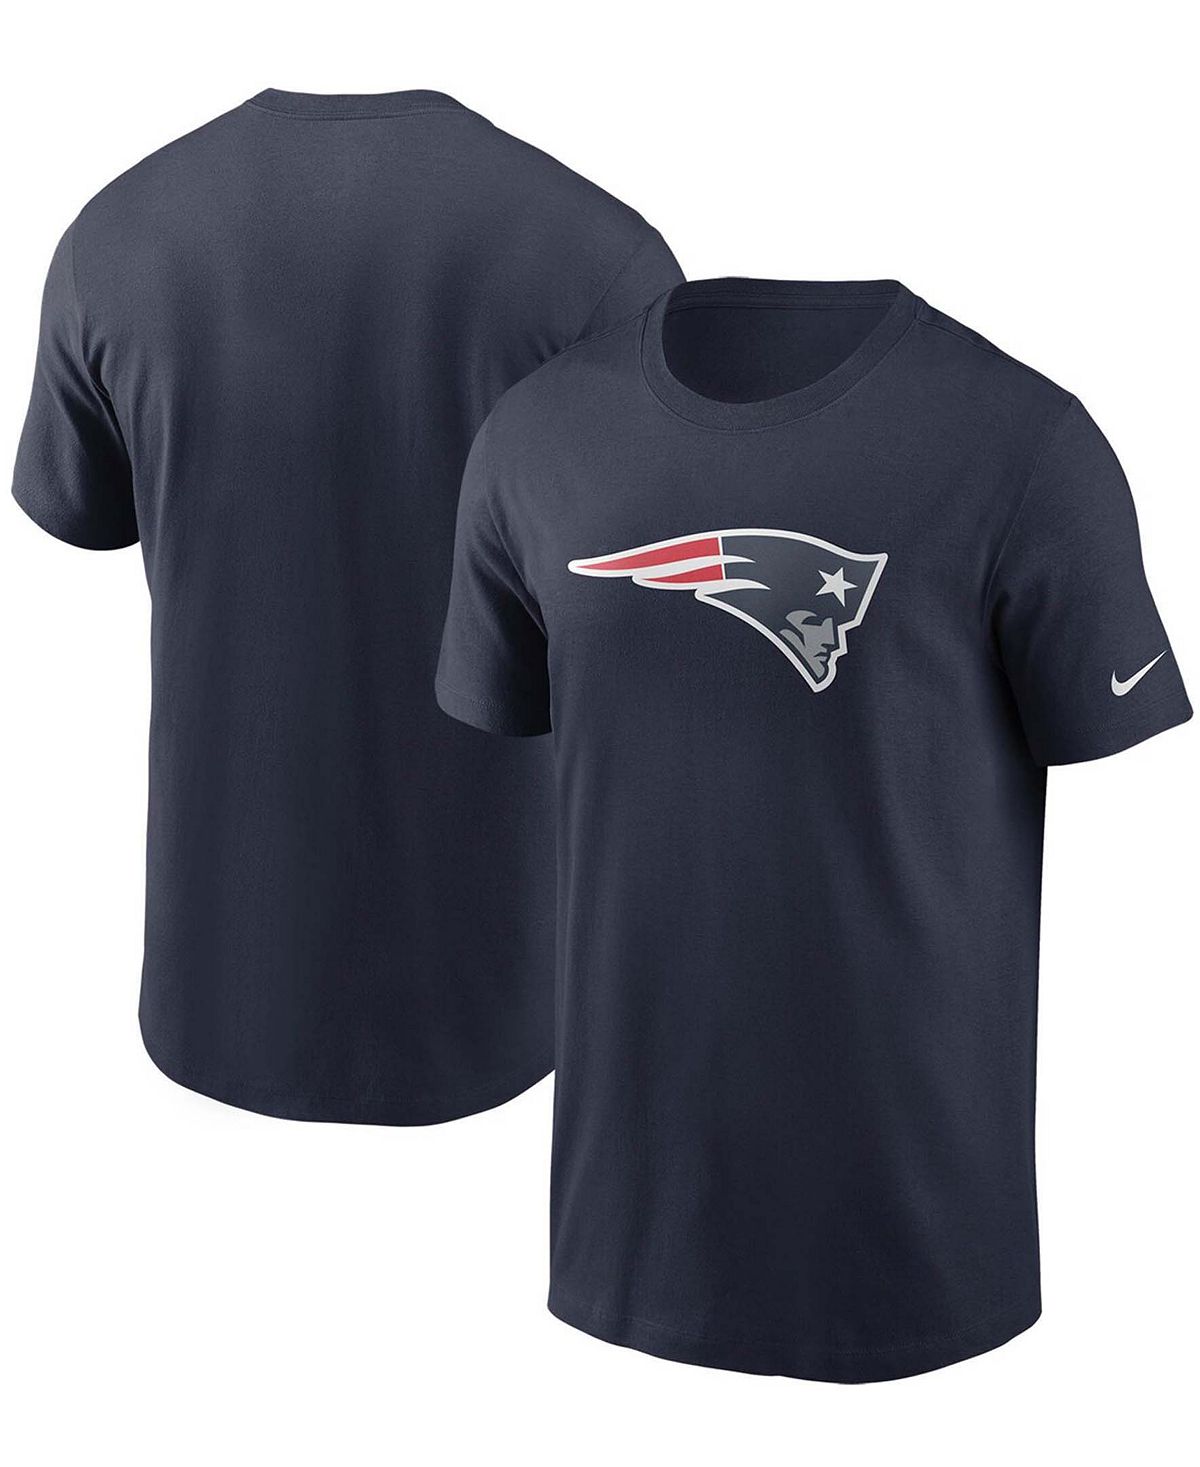 ингленд джордж аллан эликсир ненависти Мужская темно-синяя футболка с основным логотипом New England Patriots Nike